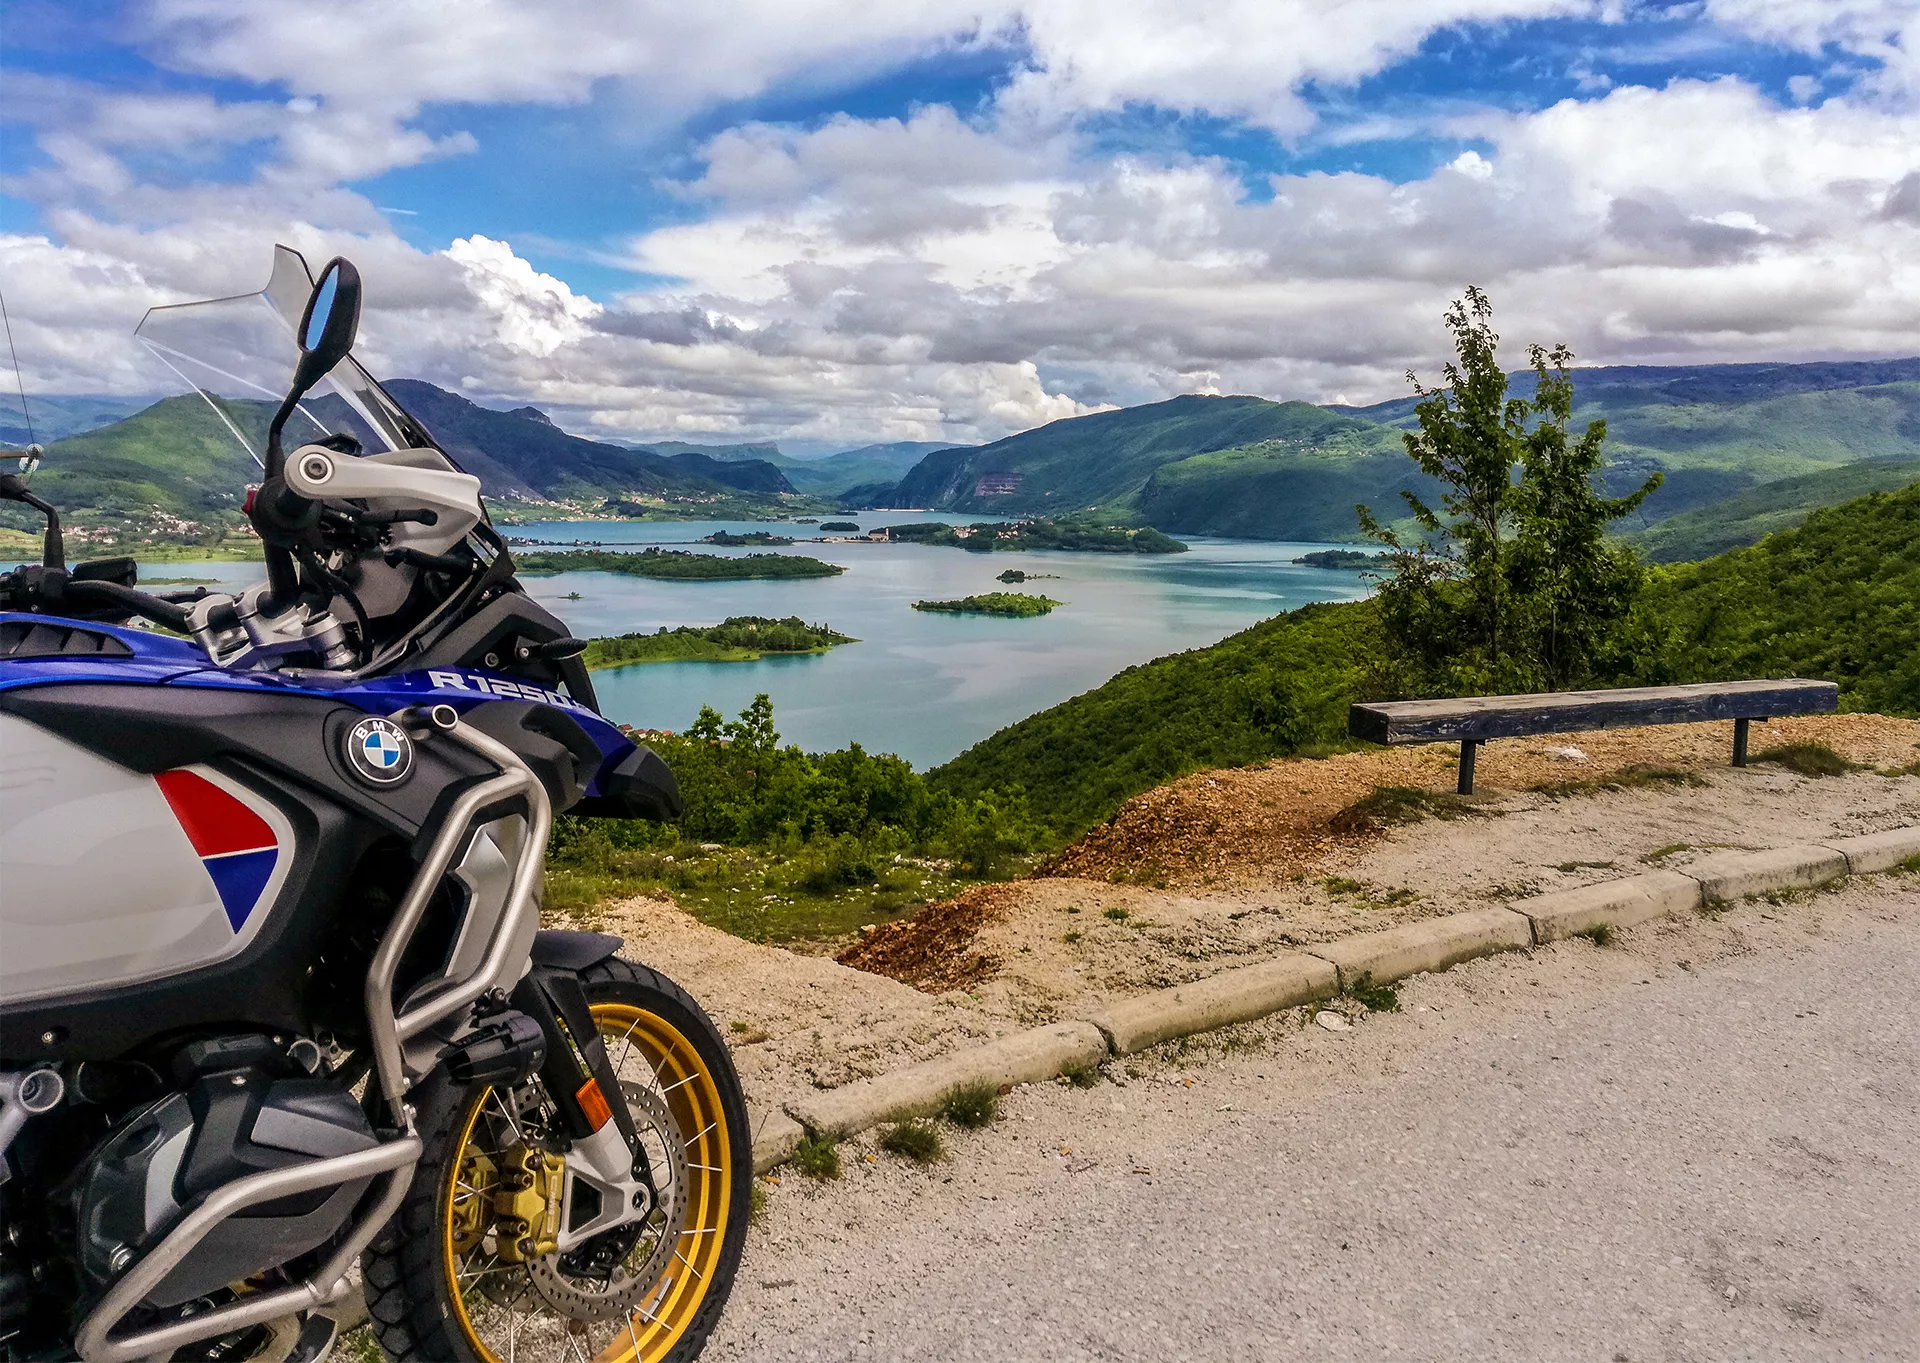 Motorcycle Rental DesmoAdventure in Croatia, Europe | Motorcycles - Rated 1